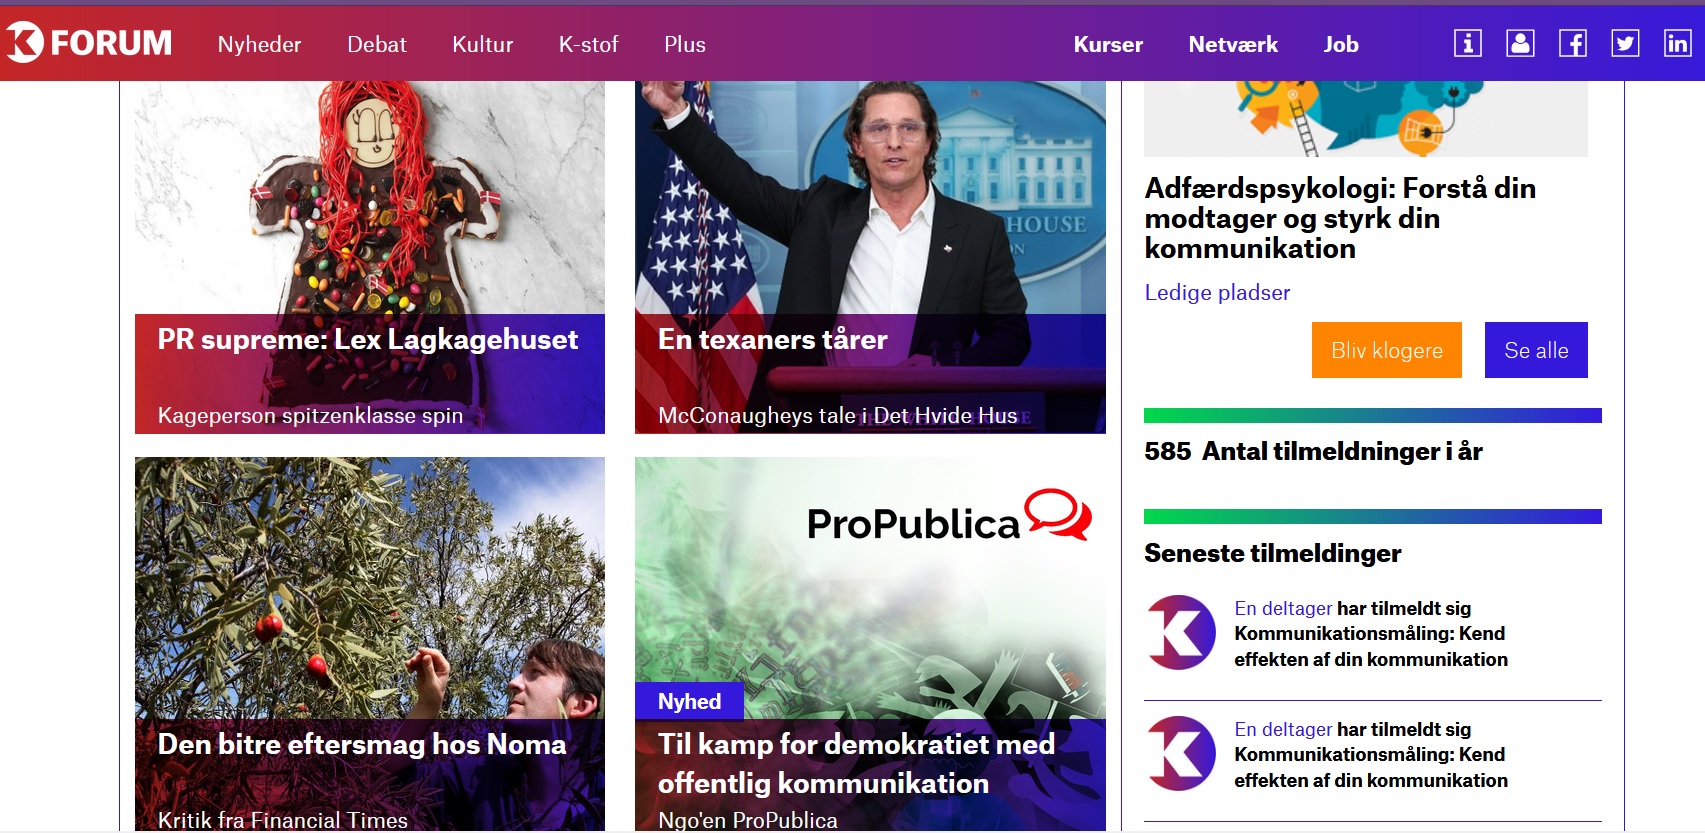 Kommunikationsforum om ProPublica: “Til kamp for demokratiet med offentlig kommunikation”